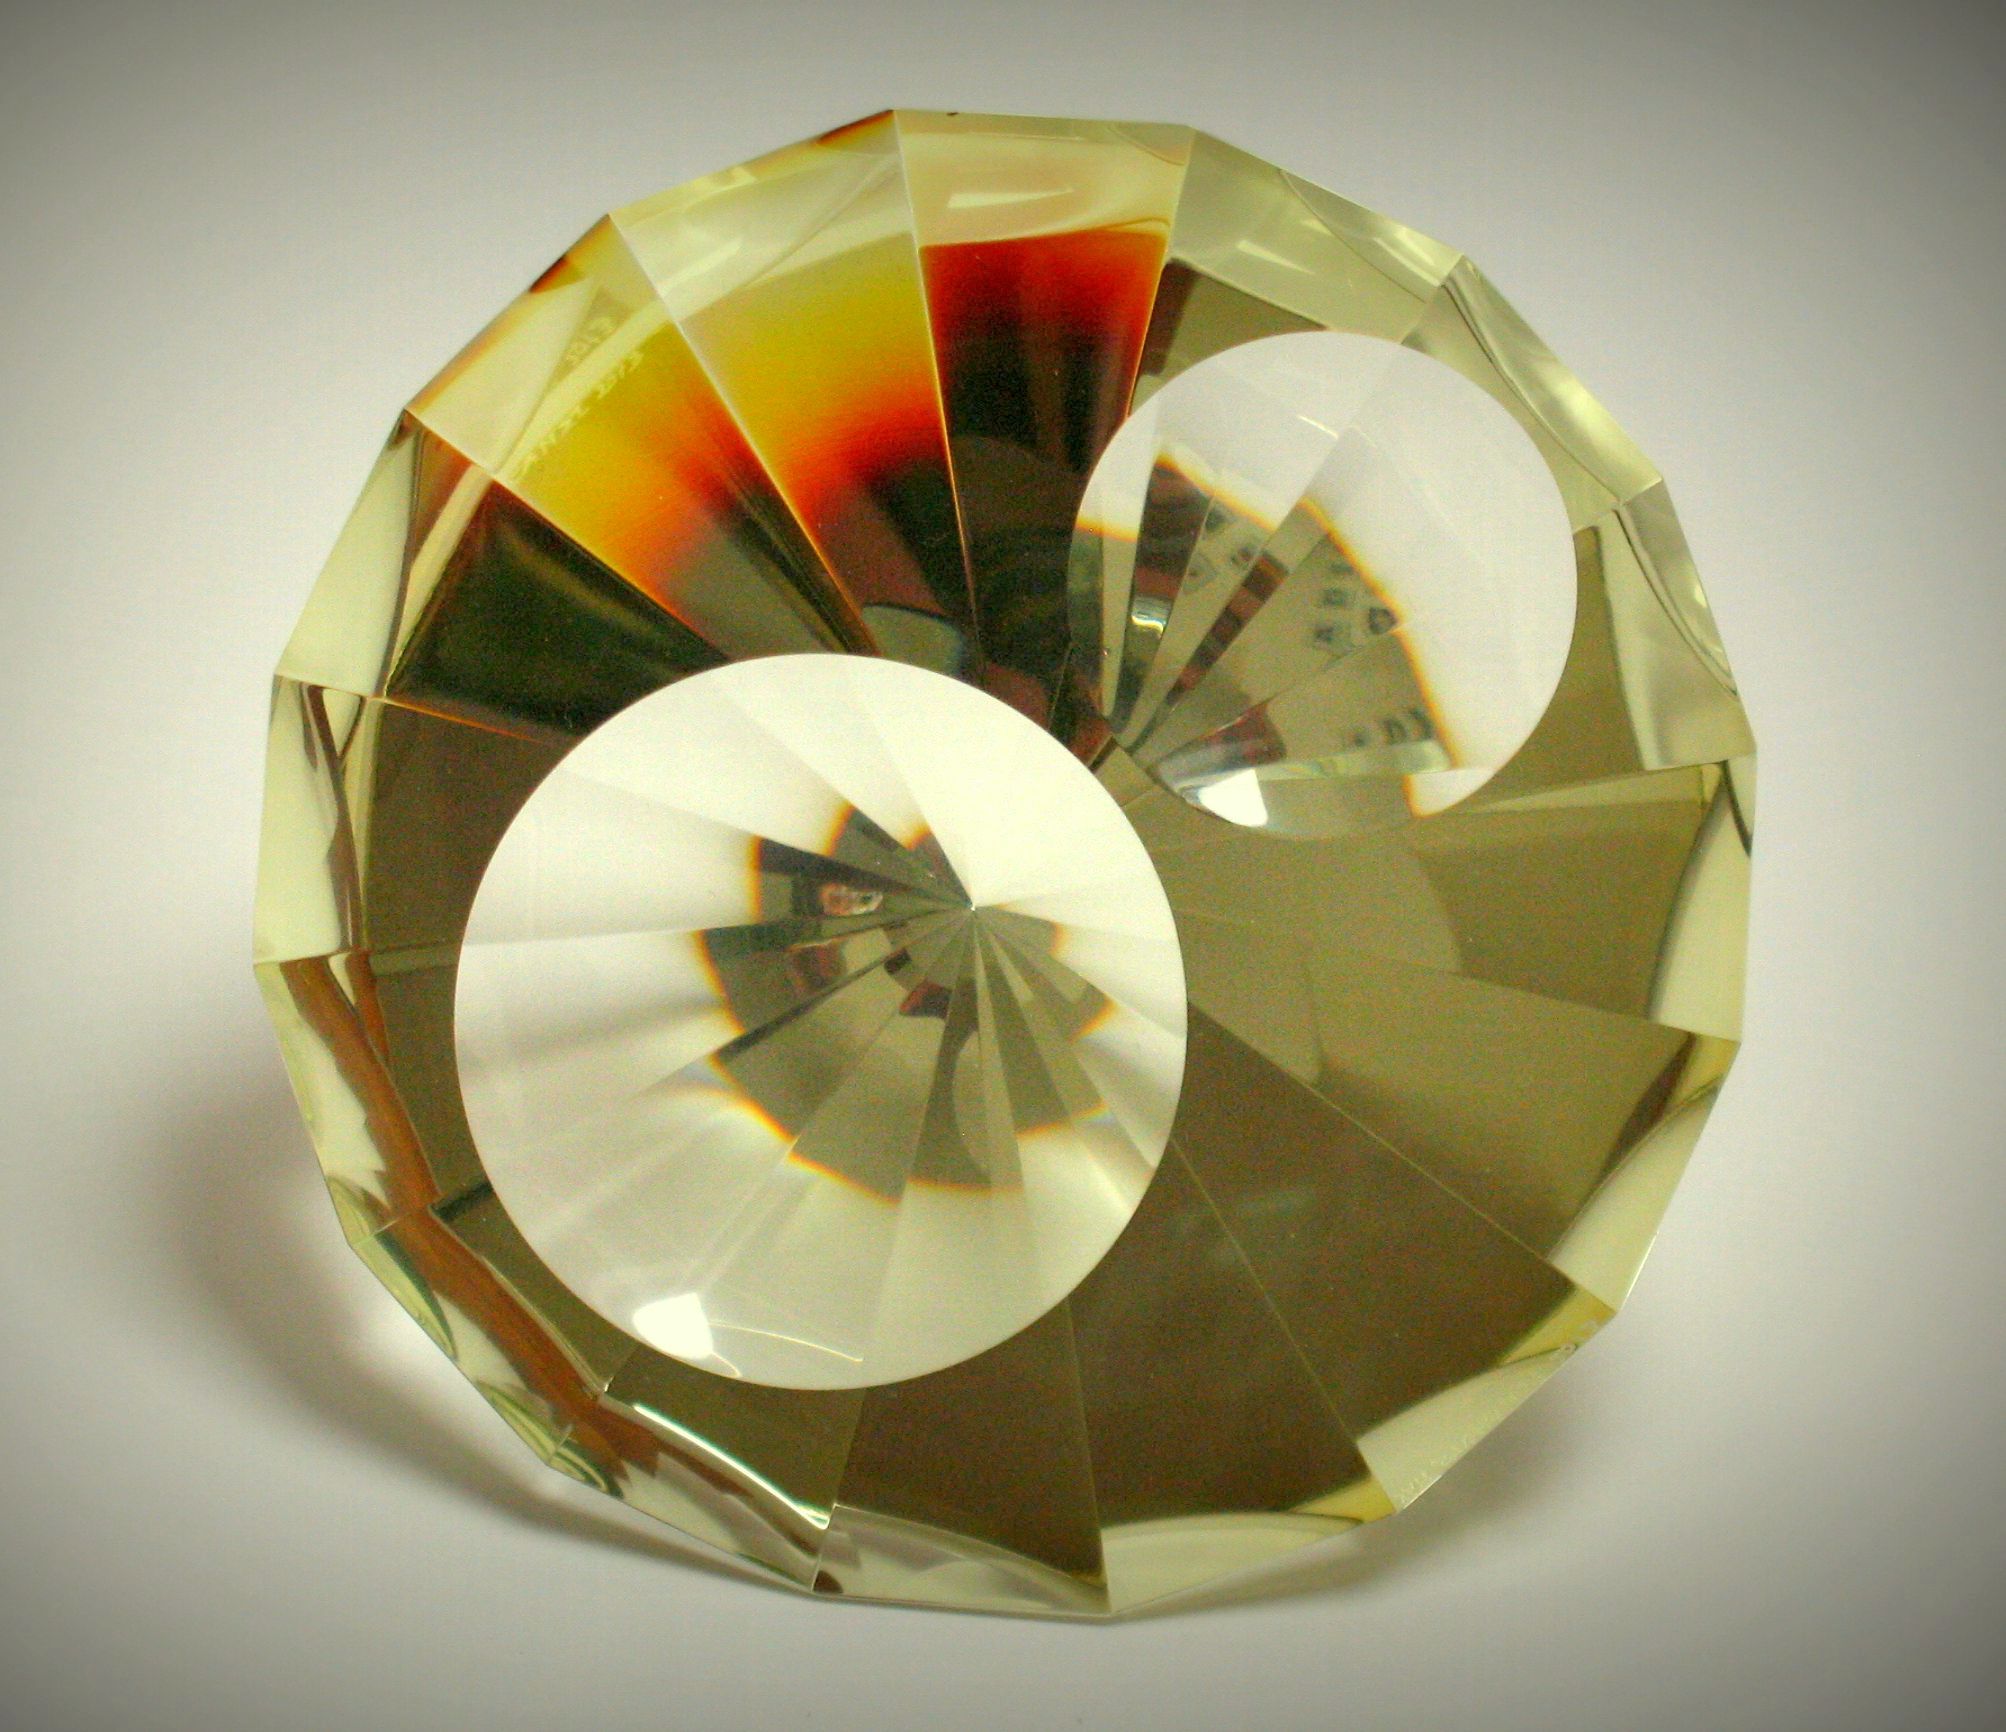 Stargate XXXI, průměr 18 cm, optické sklo, 2013